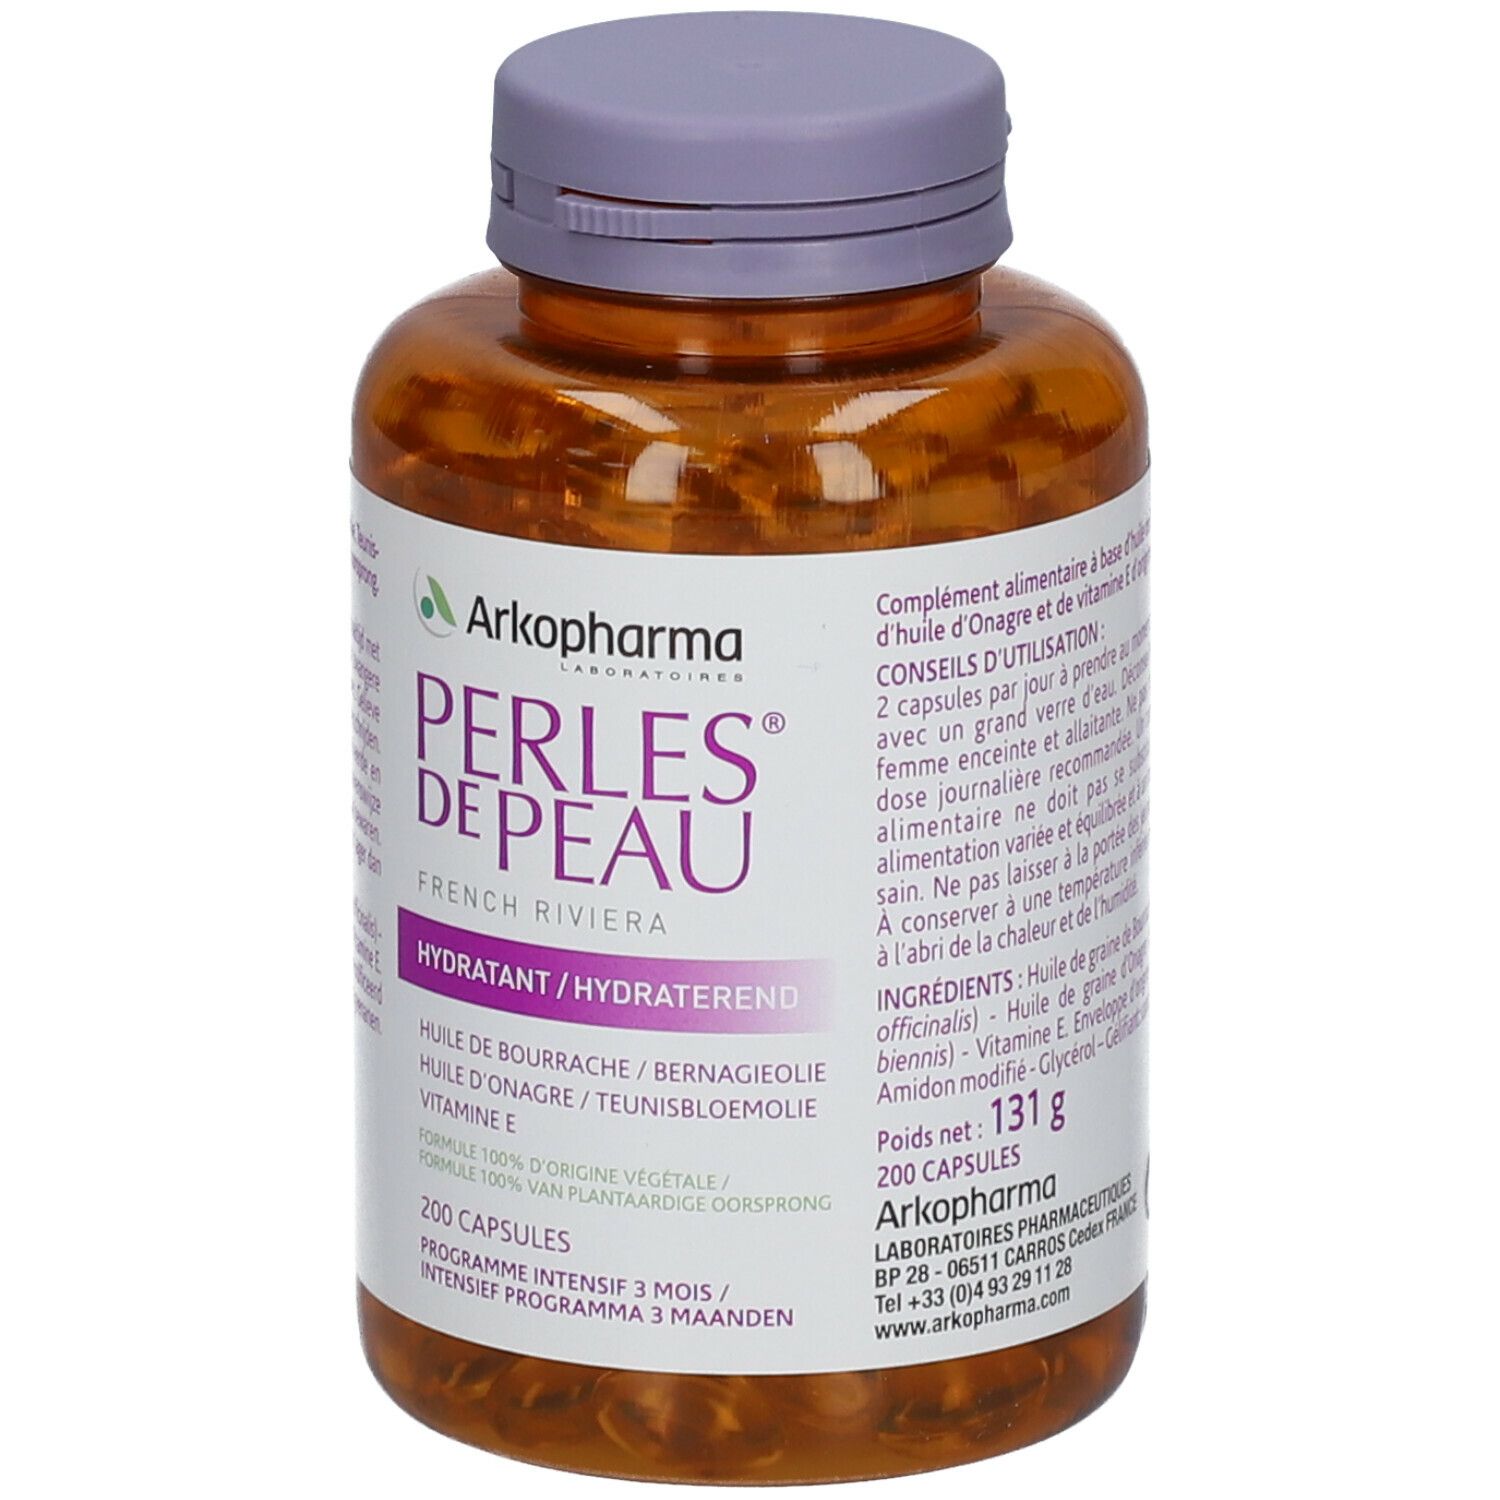 Arkopharma Perles® de peau Hydratant